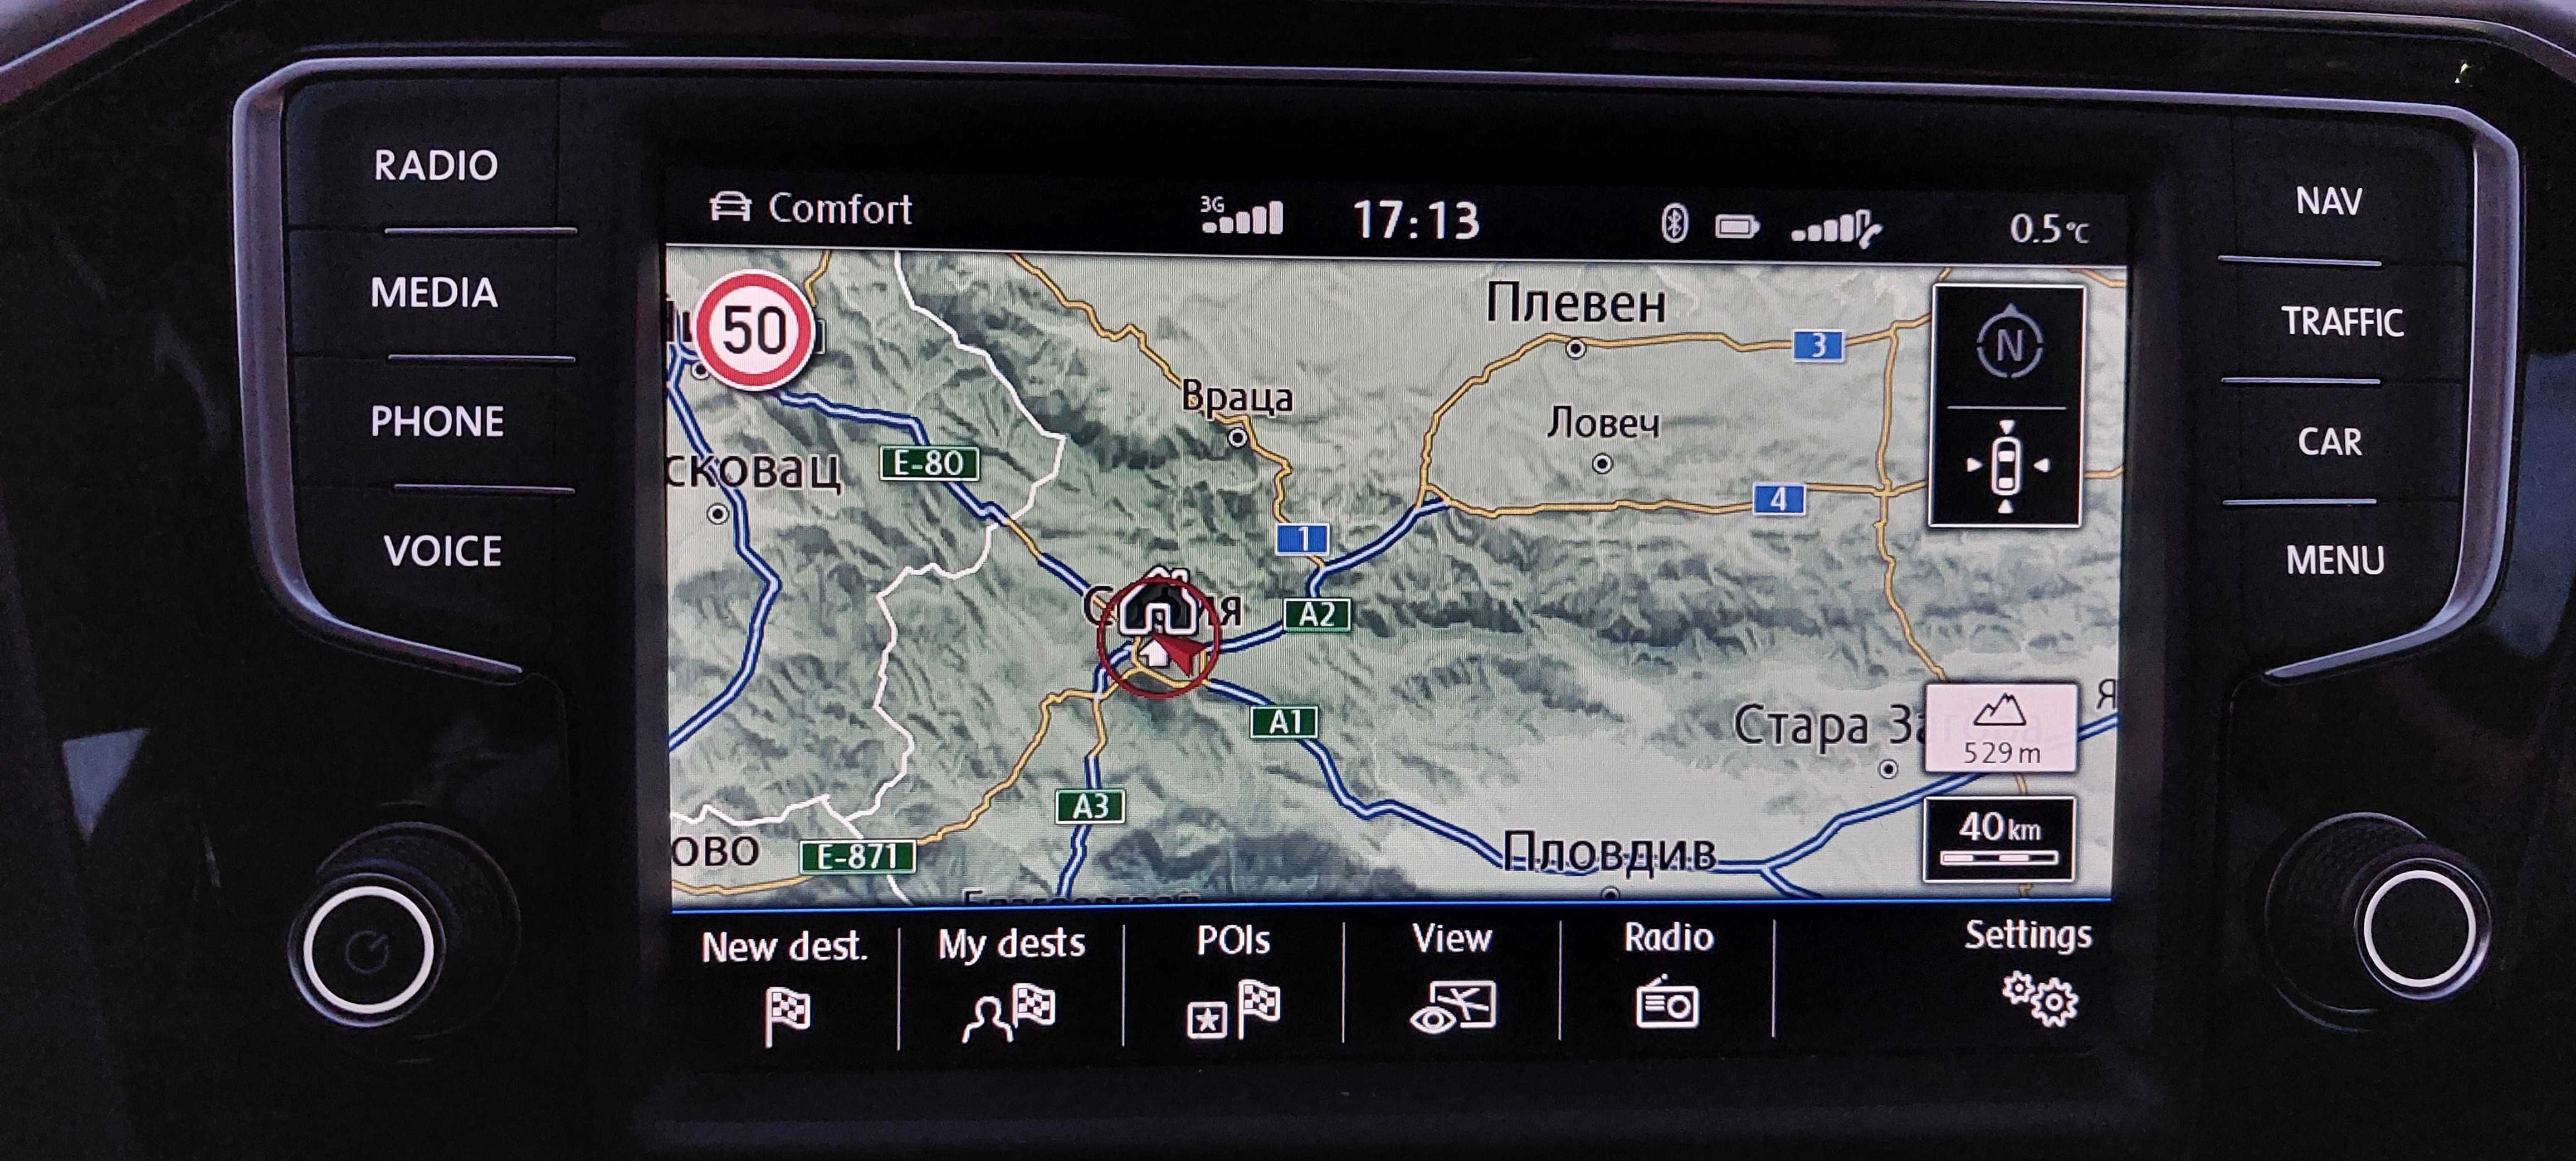 2022/2023 Навигационни карти за VW Discover Media Pro MIB1, MIB2